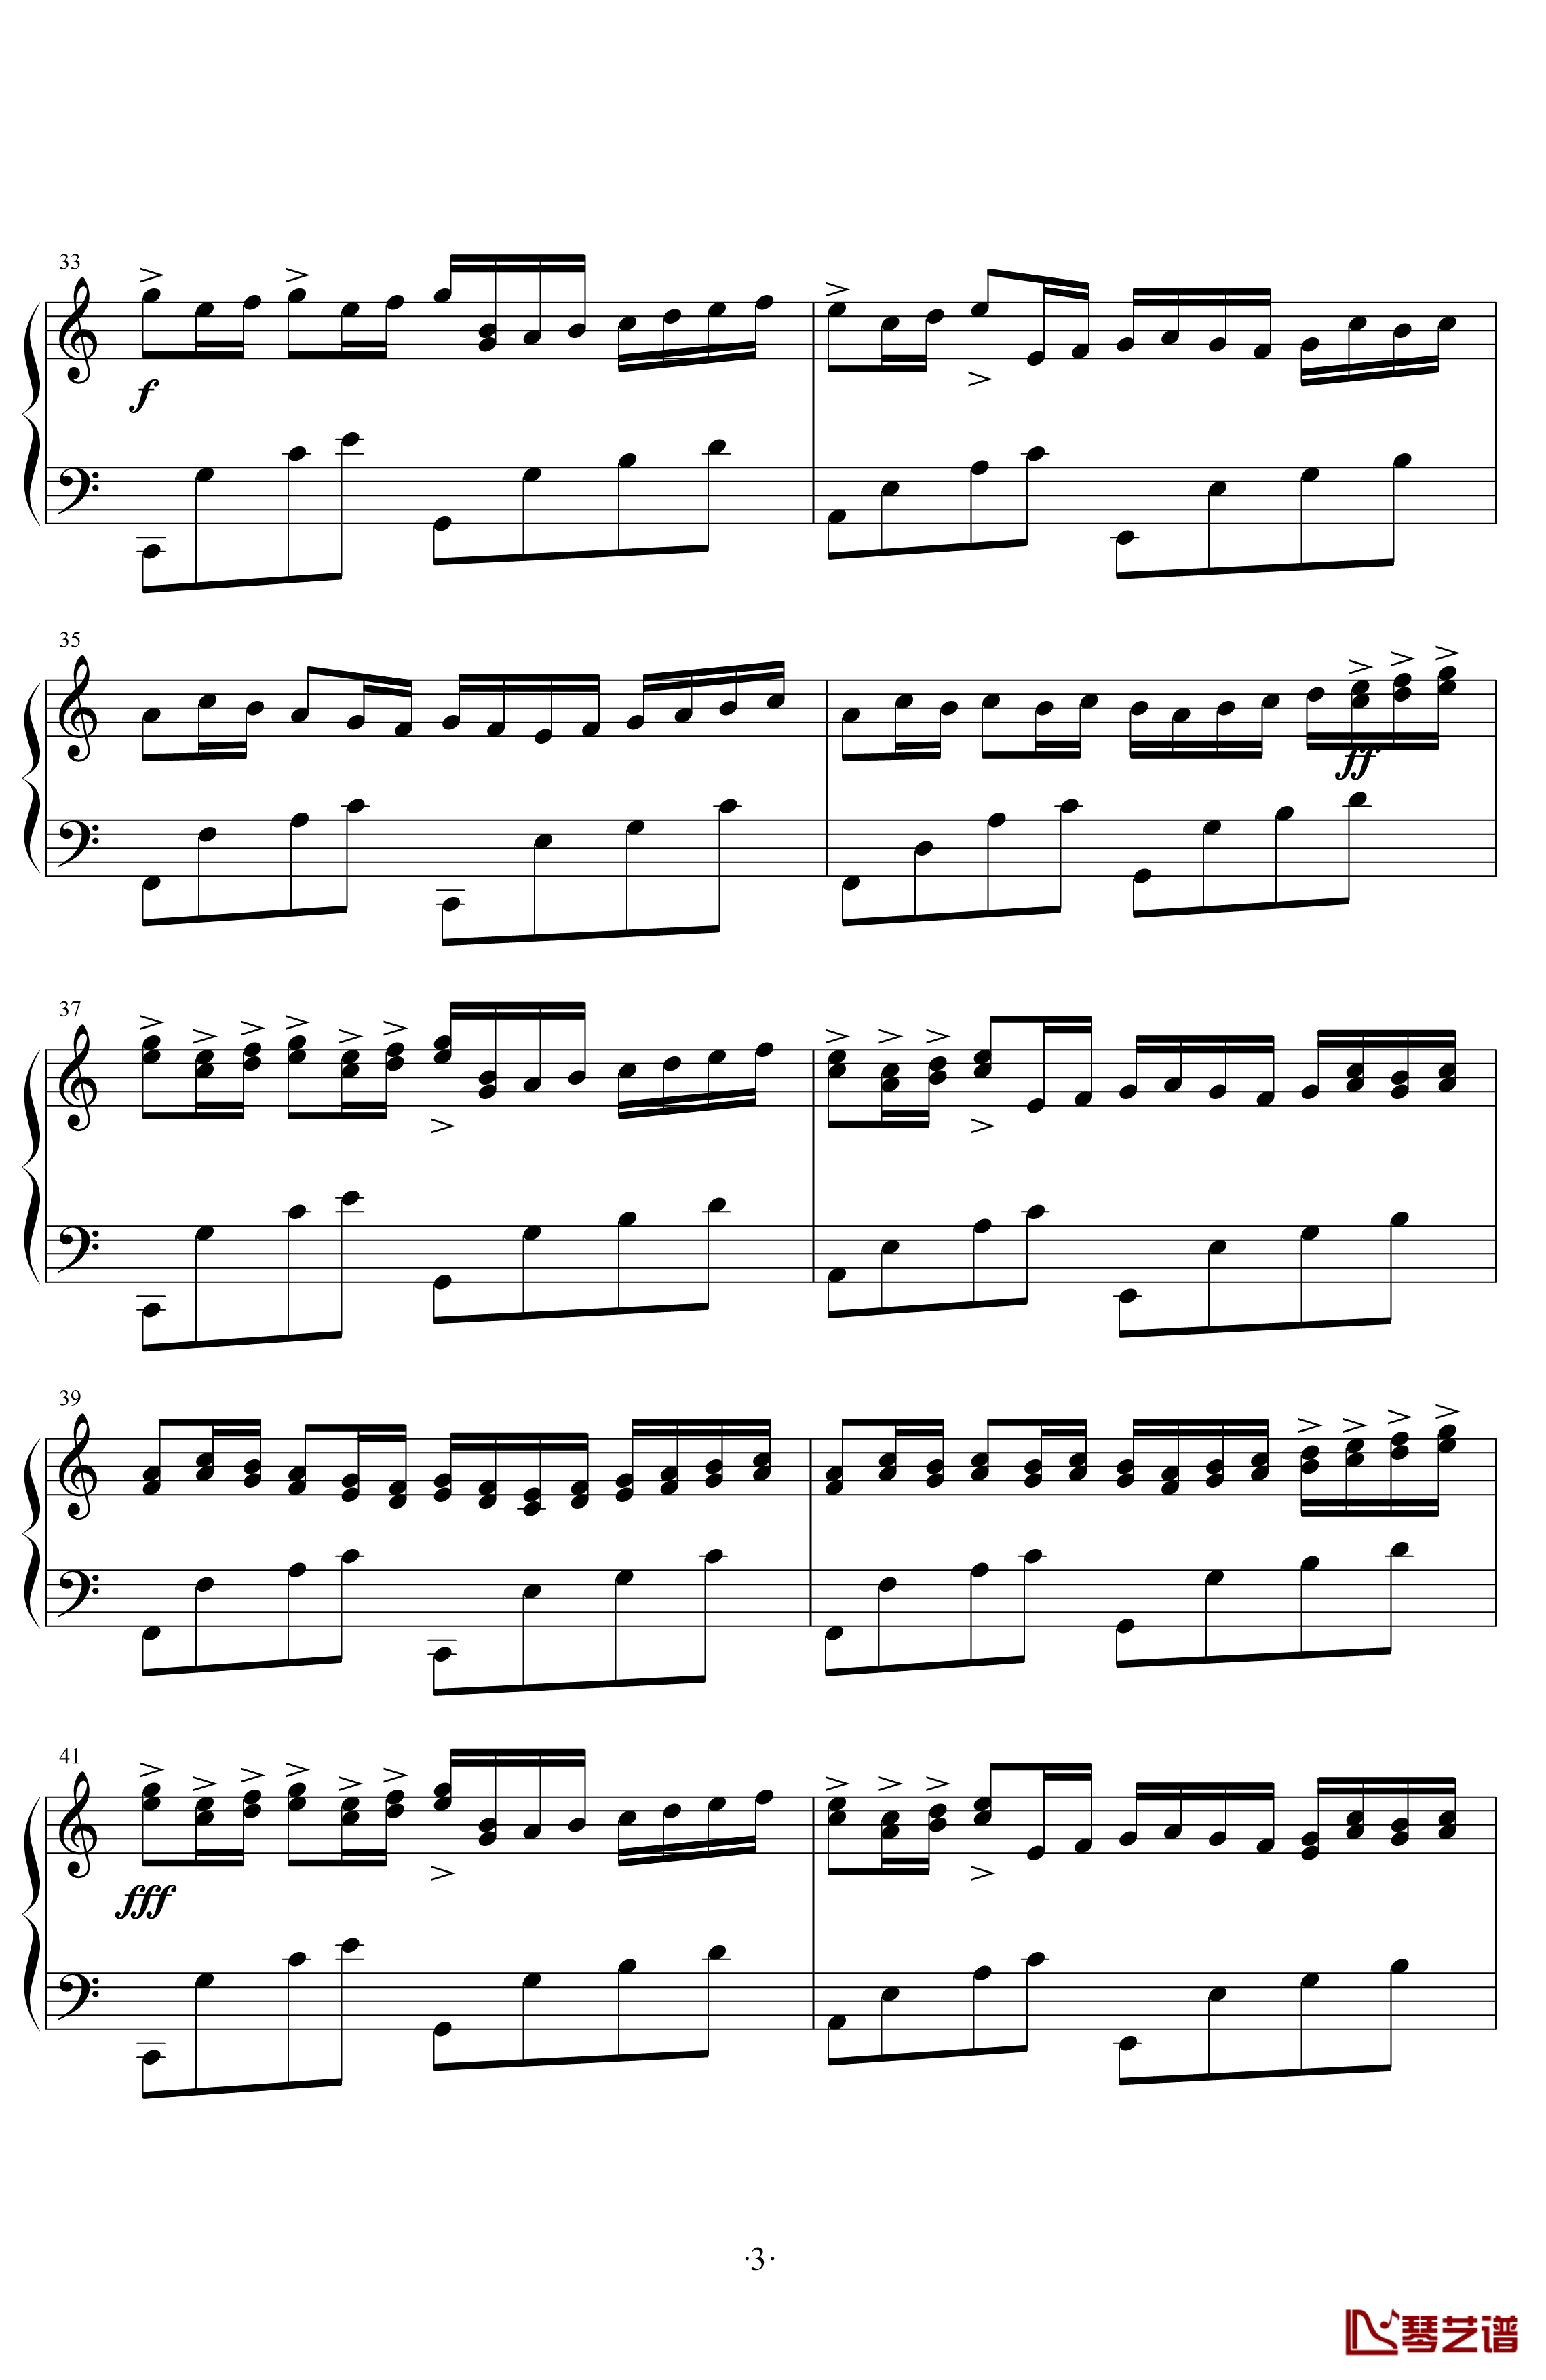 卡农变奏曲钢琴谱-Variations on the Canon by Pachelbel V.L.最终定本-George Winston3